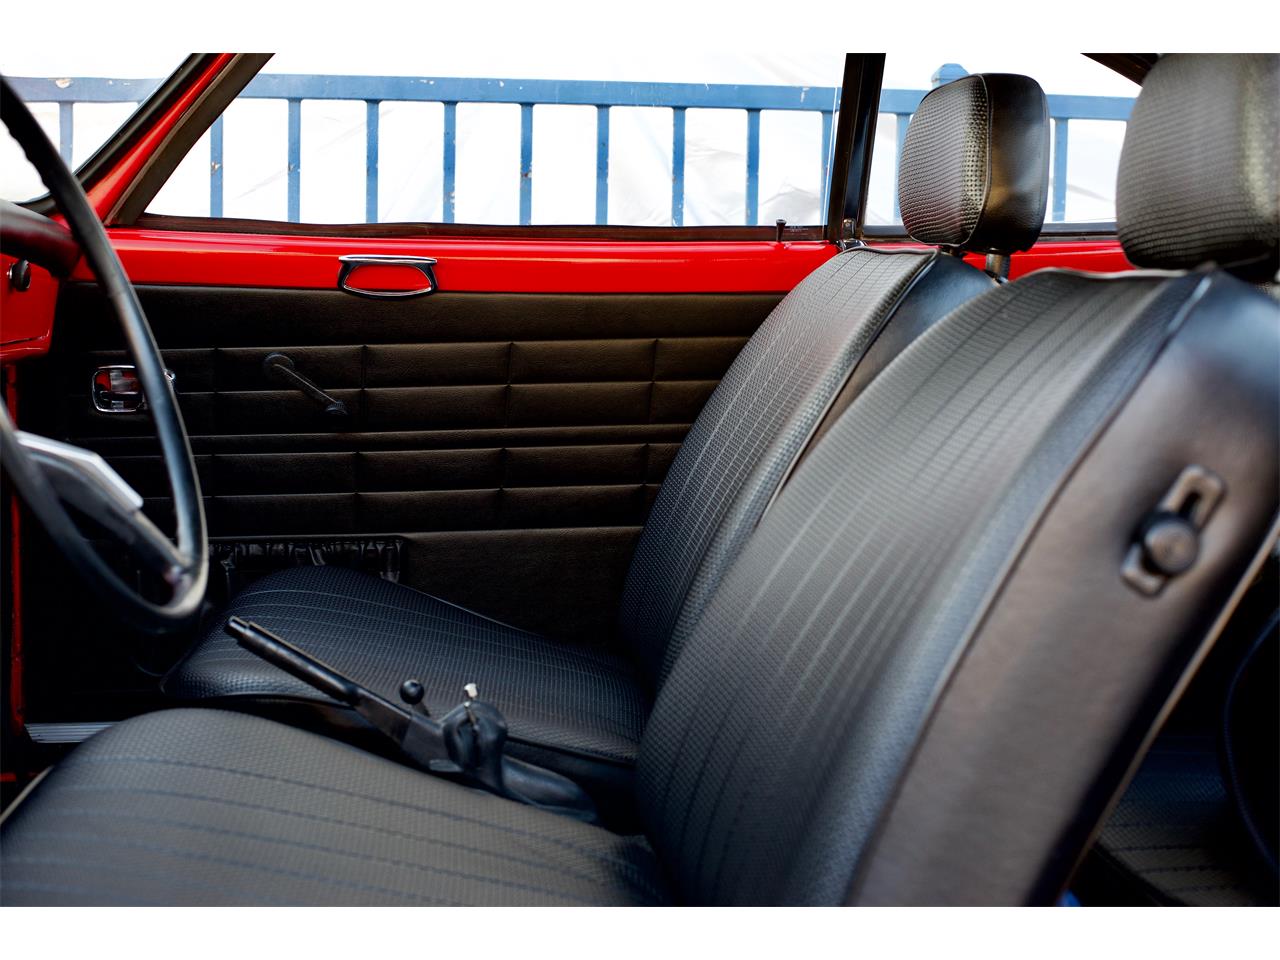 1969 Volkswagen Karmann Ghia For Sale Classiccars Com Cc